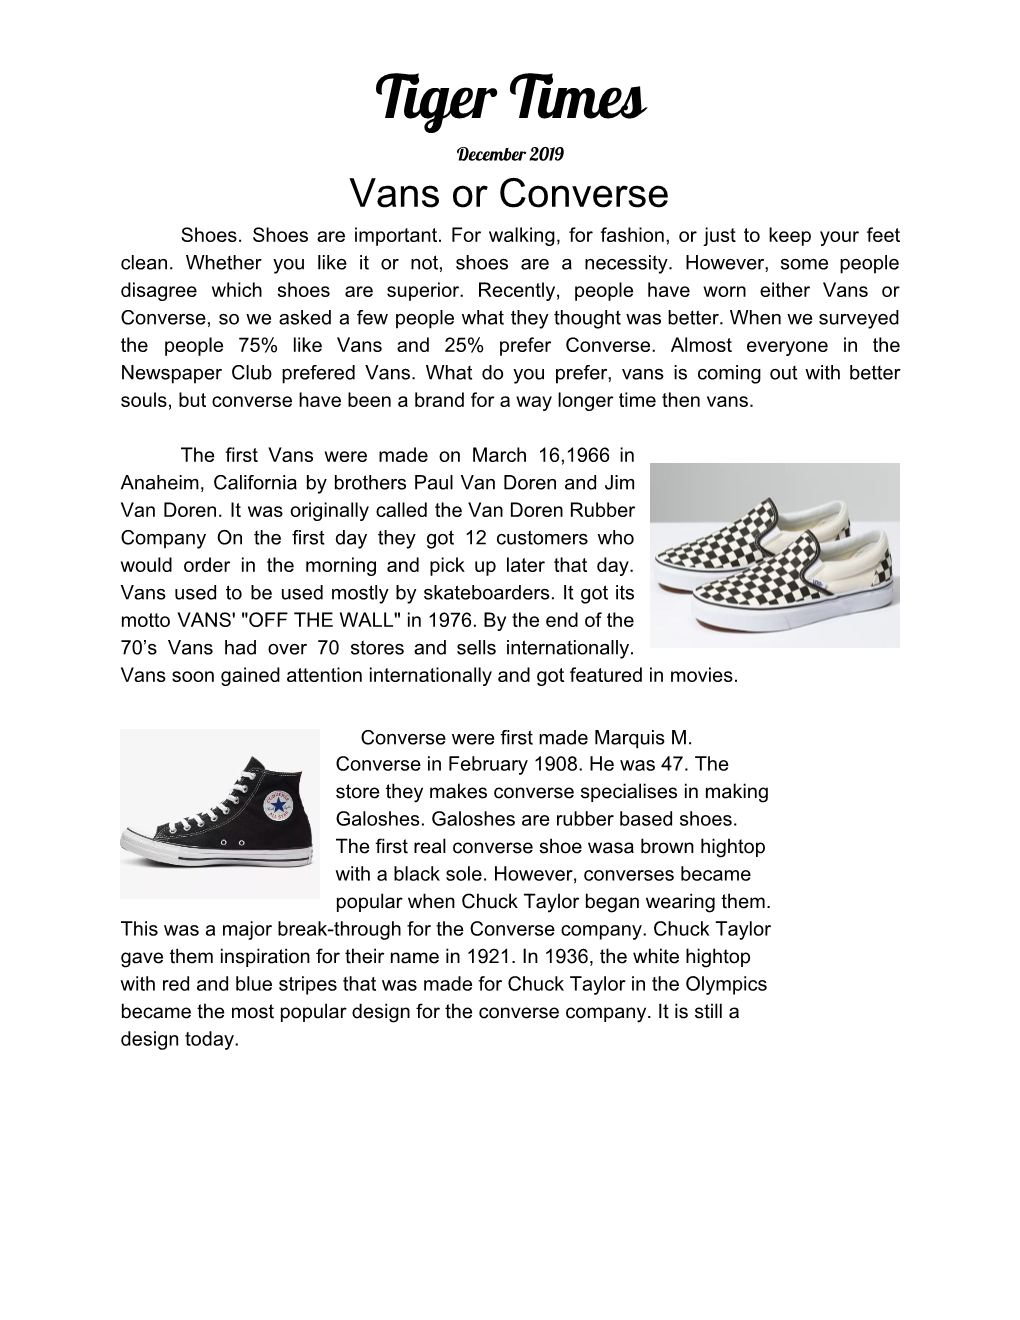 Tiger Times December 2019 Vans Or Converse Shoes